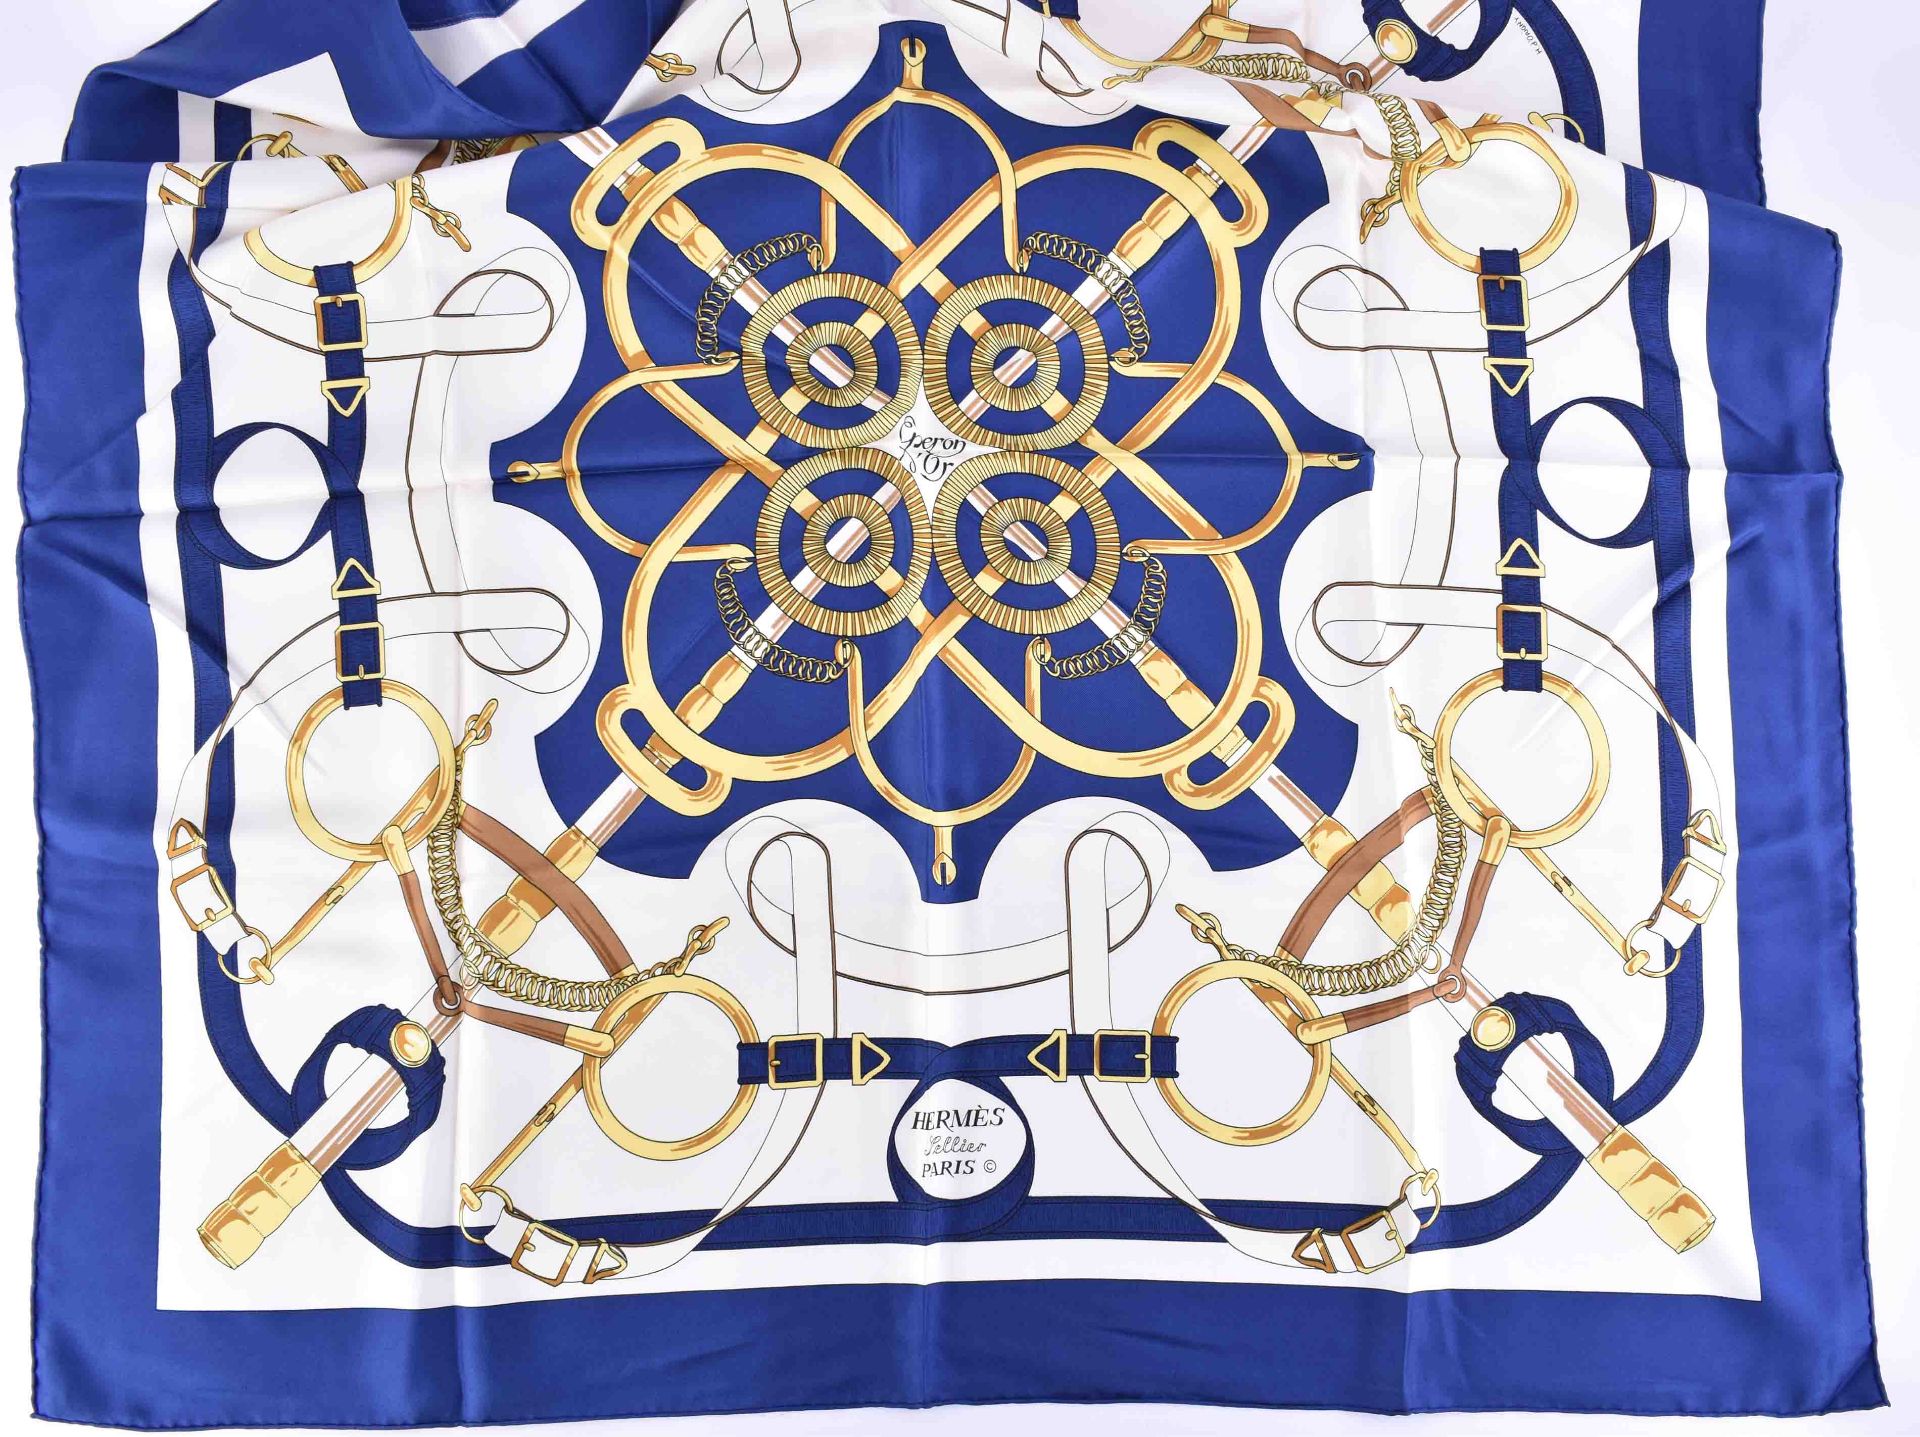  Silk scarf Hermes Paris  - Image 2 of 2